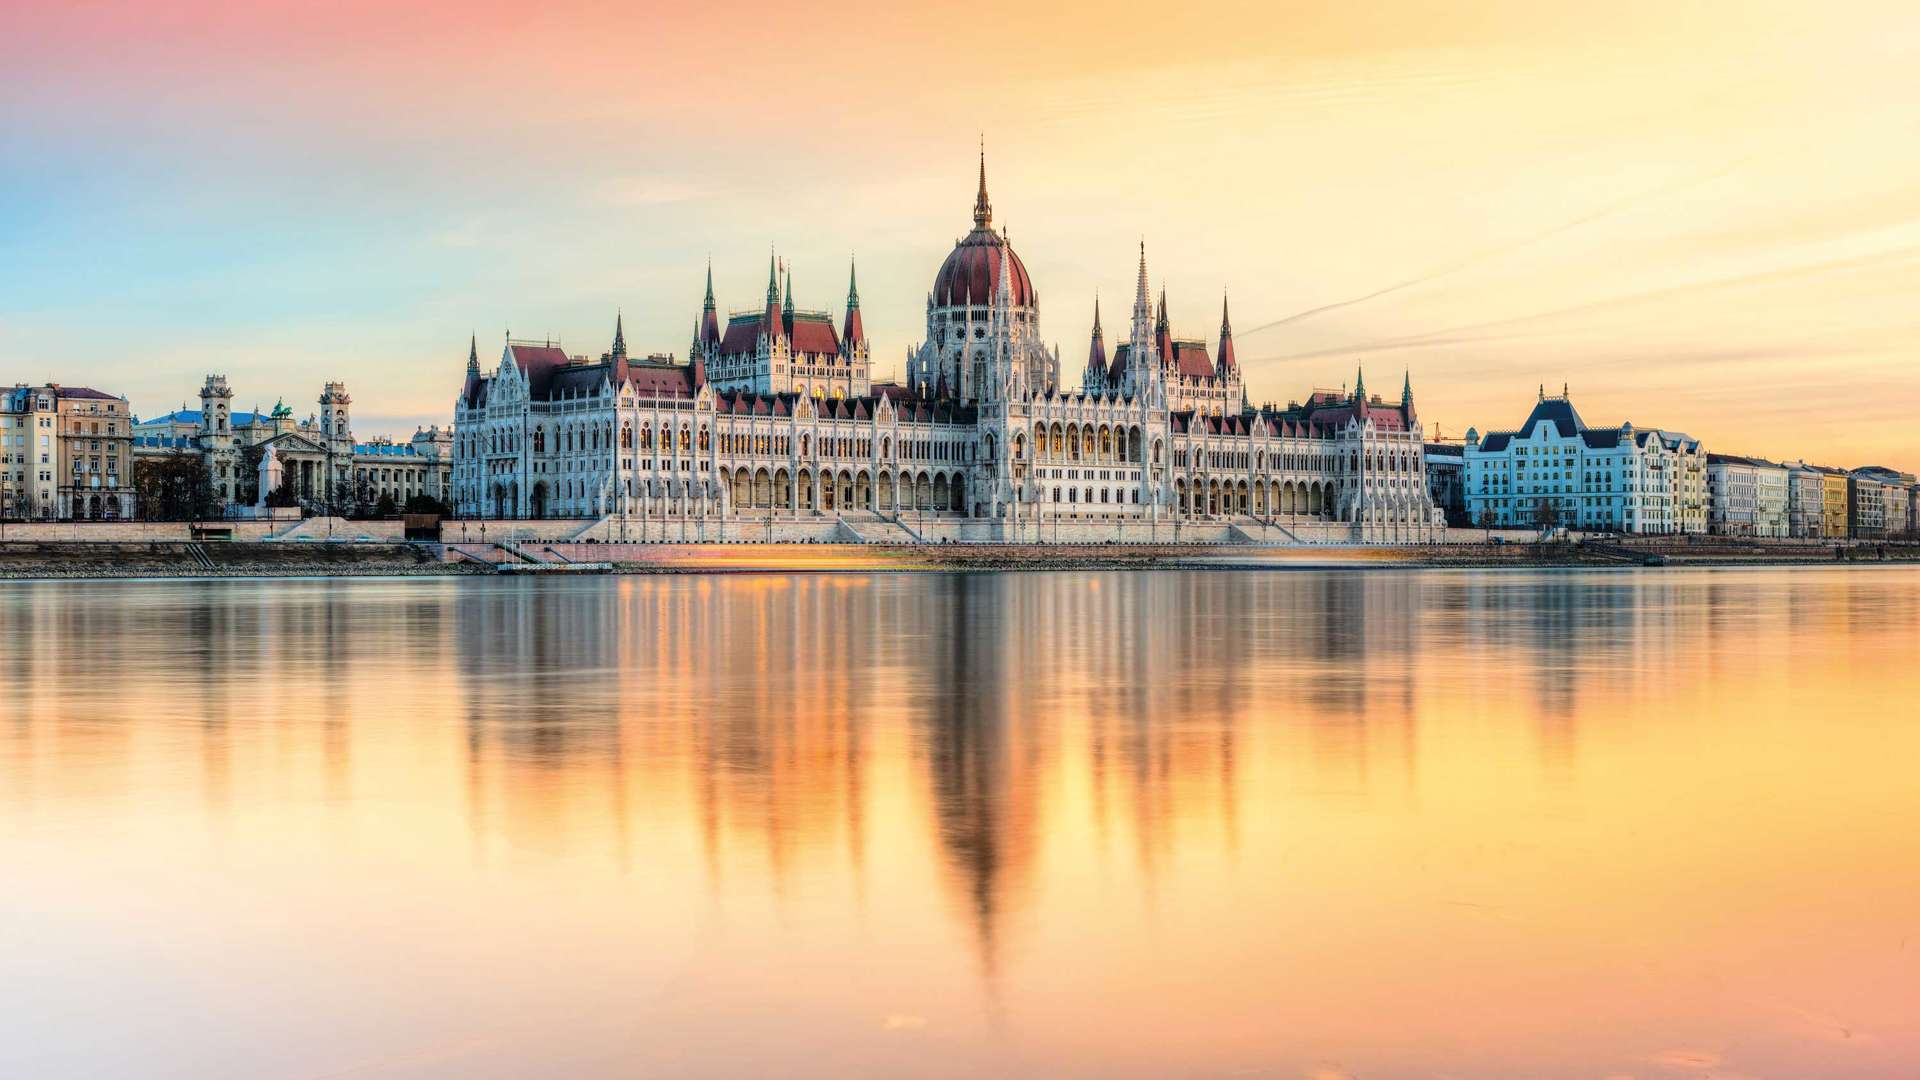 Parliament at Sunset, Budapest, Hungary 